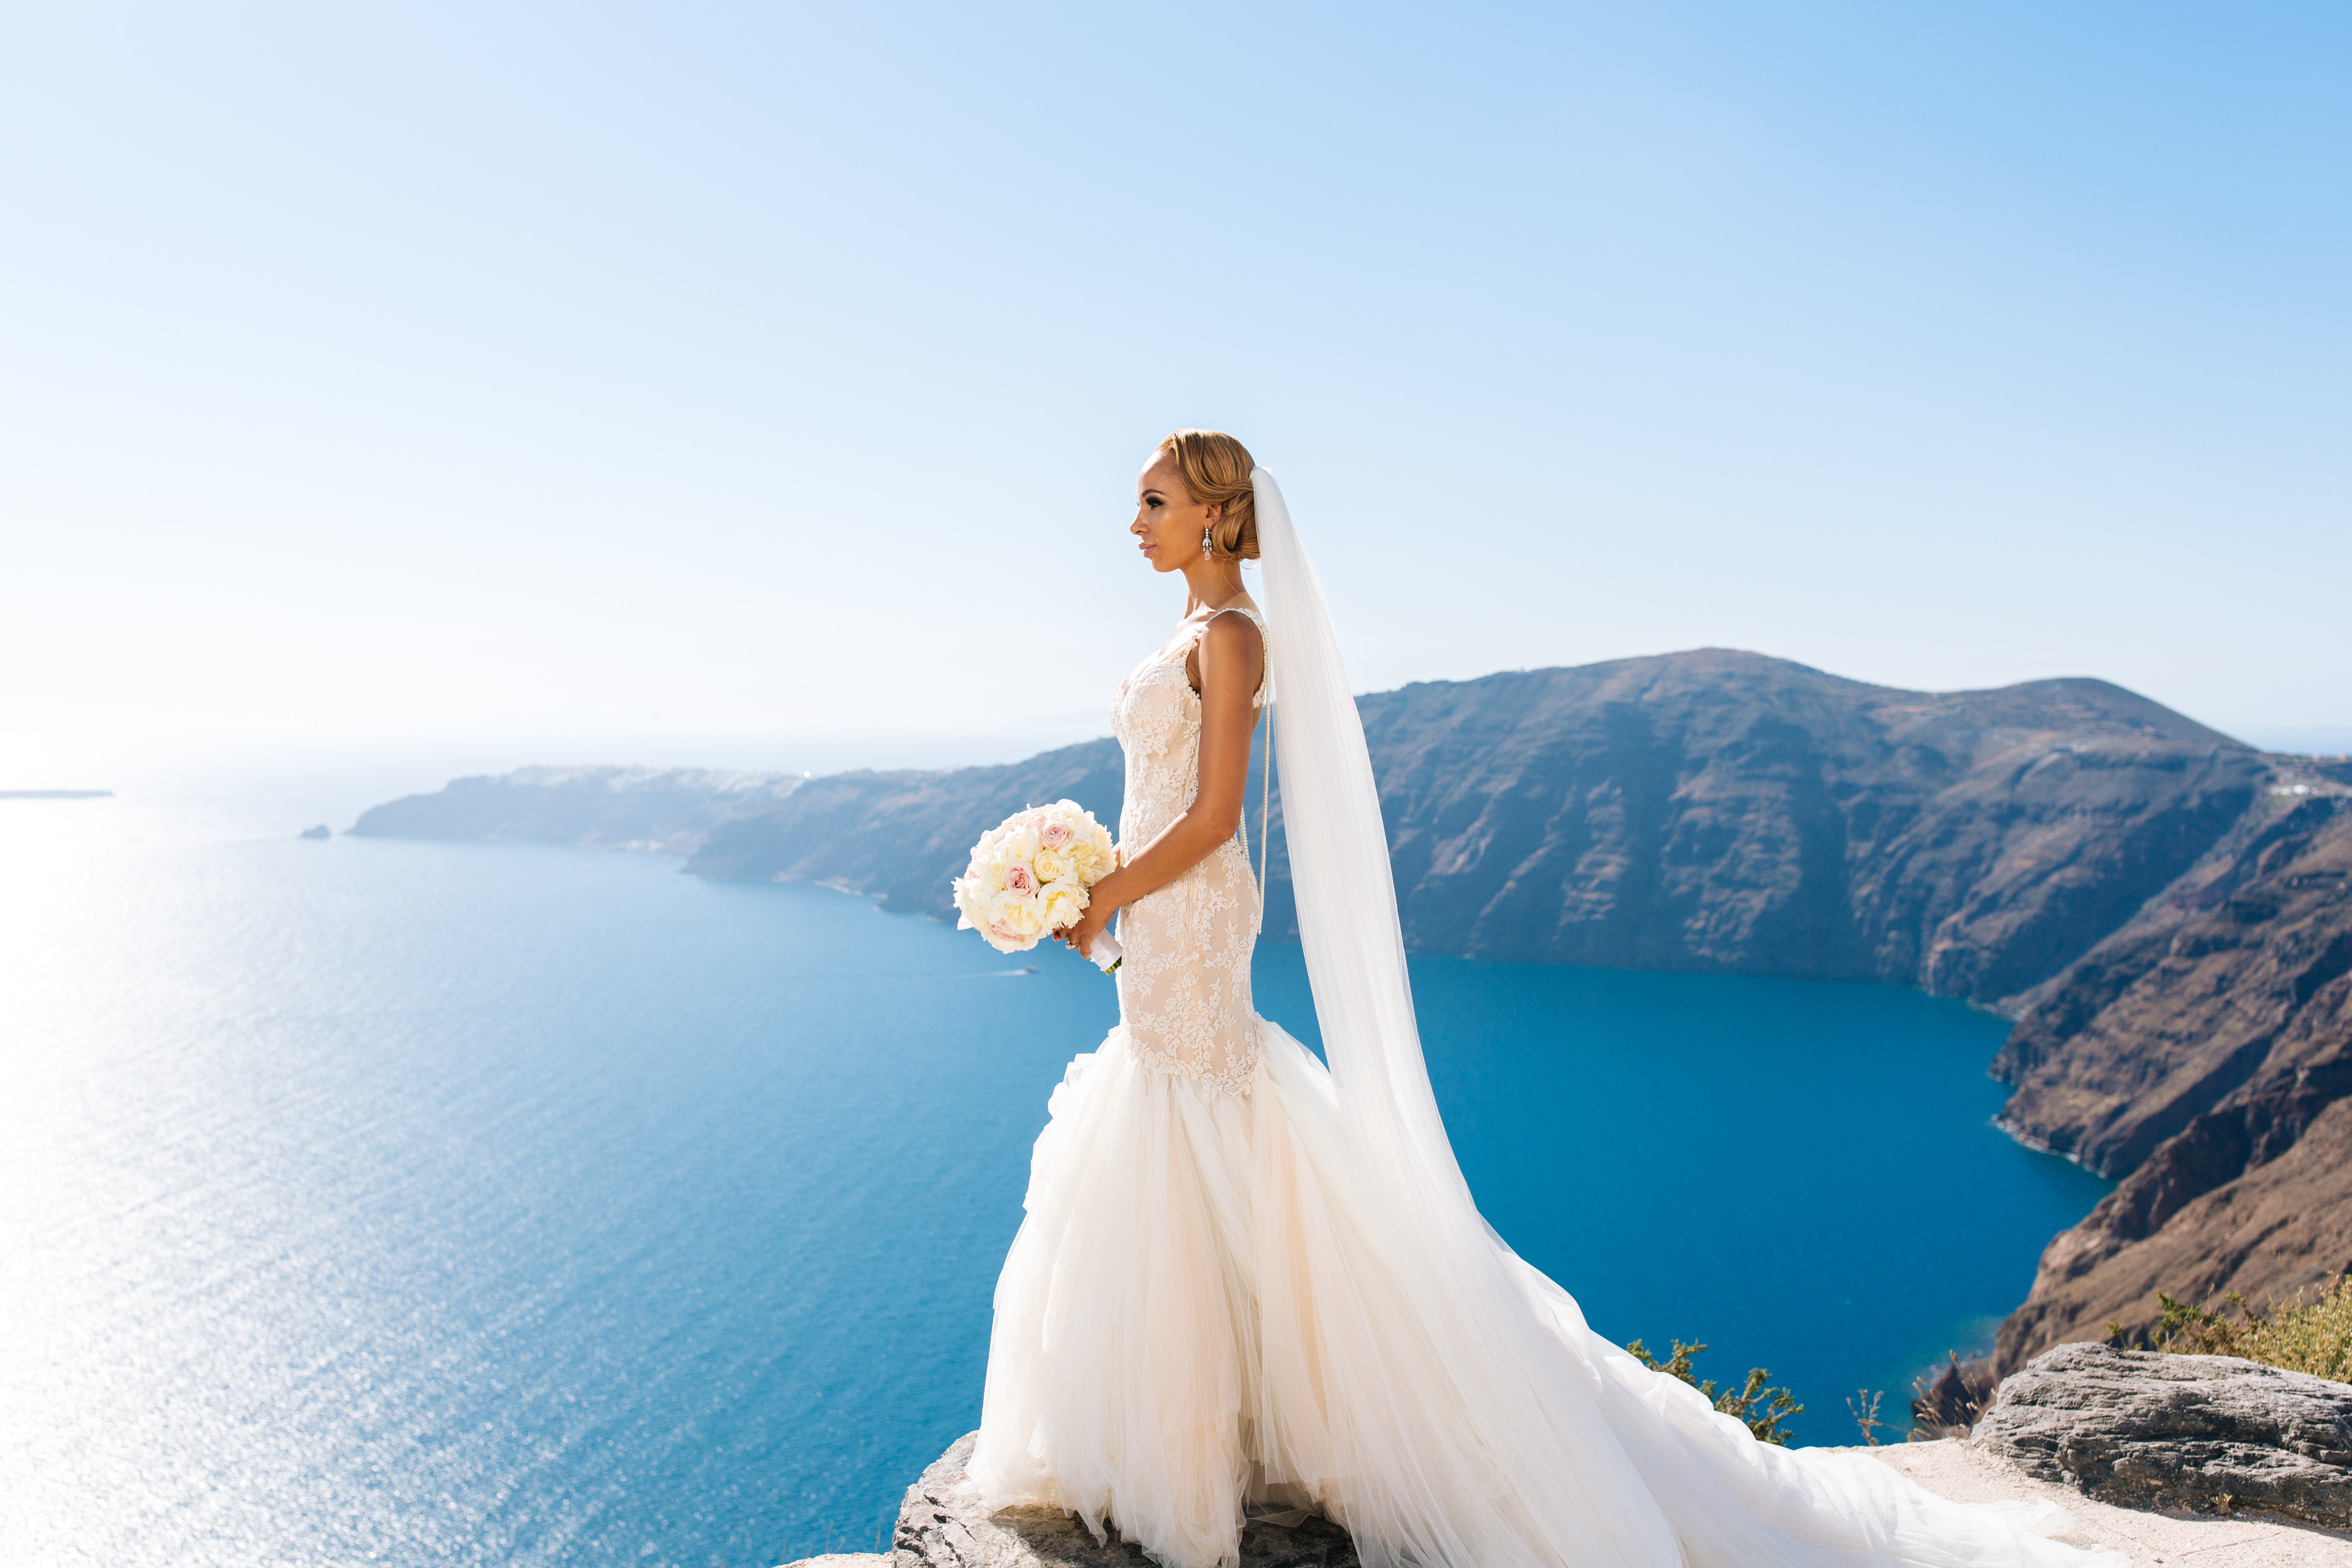 Bridal Bliss: Jordan and Essie's Romantic Santorini Wedding Is the ...